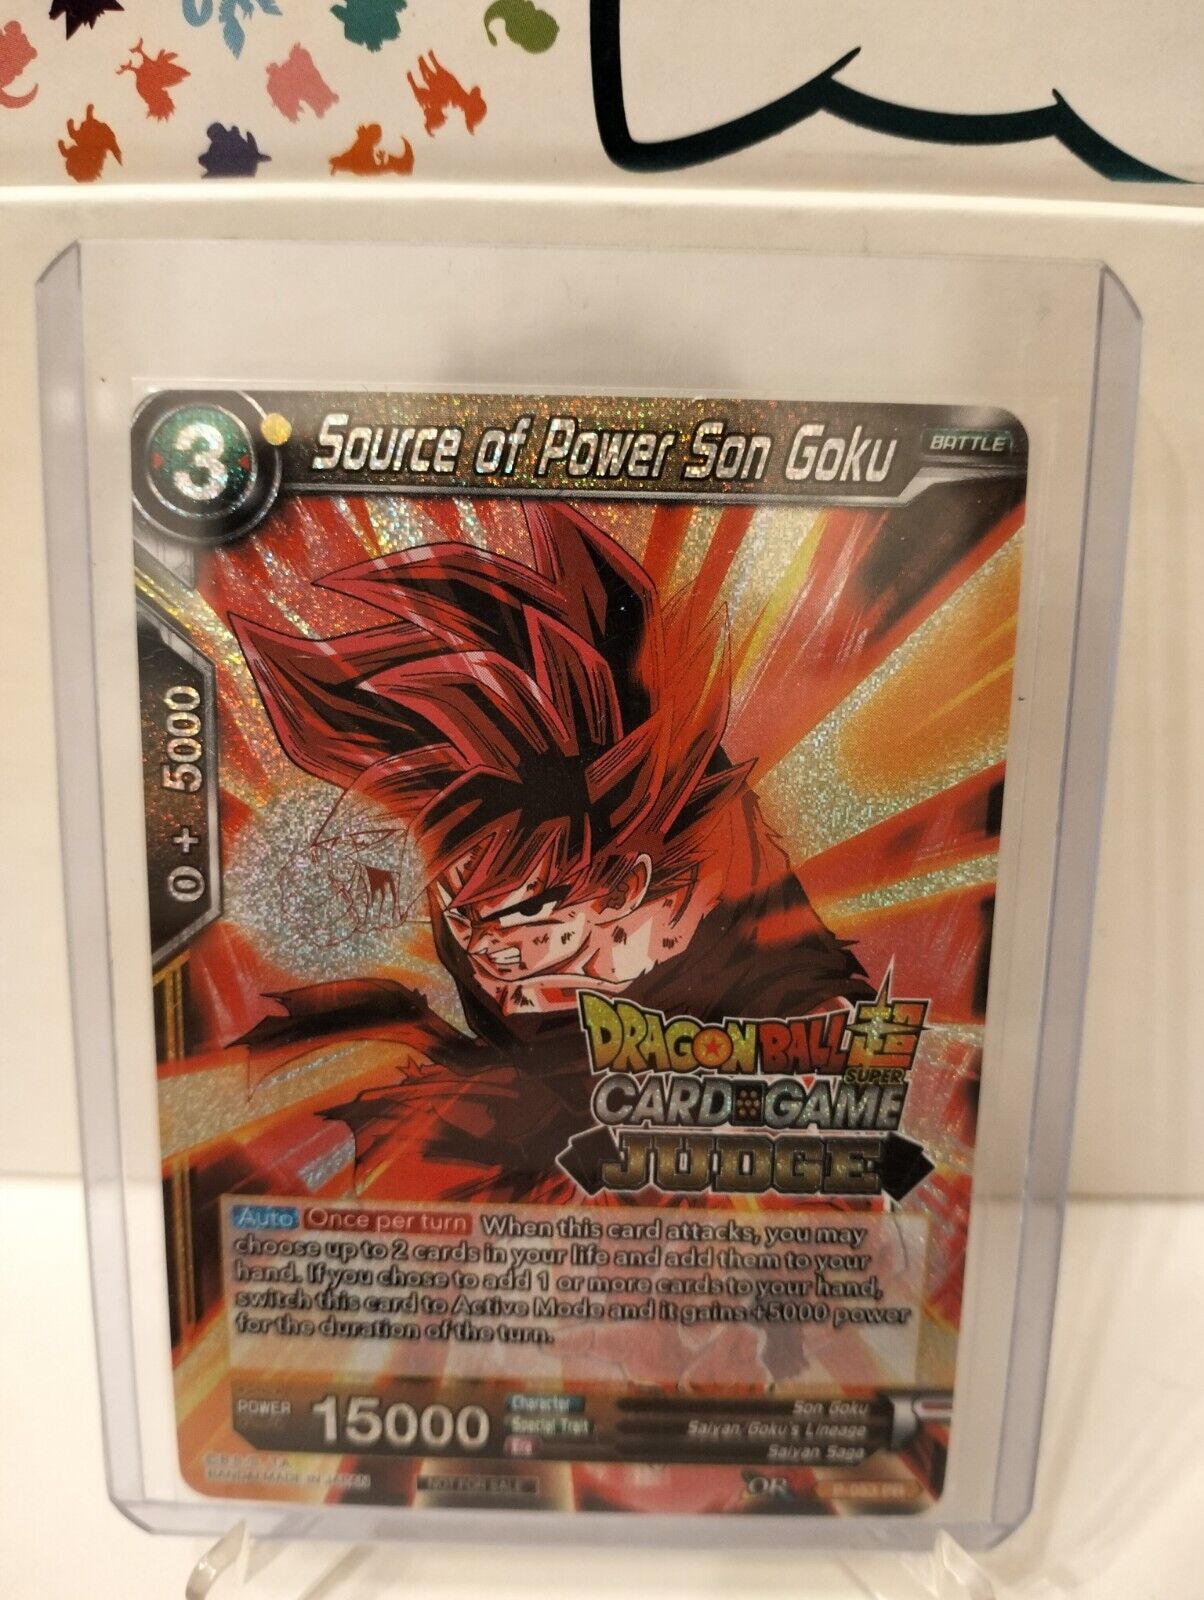 Source of Power Son Goku, Dragonball Super Card Game, Judge Promo